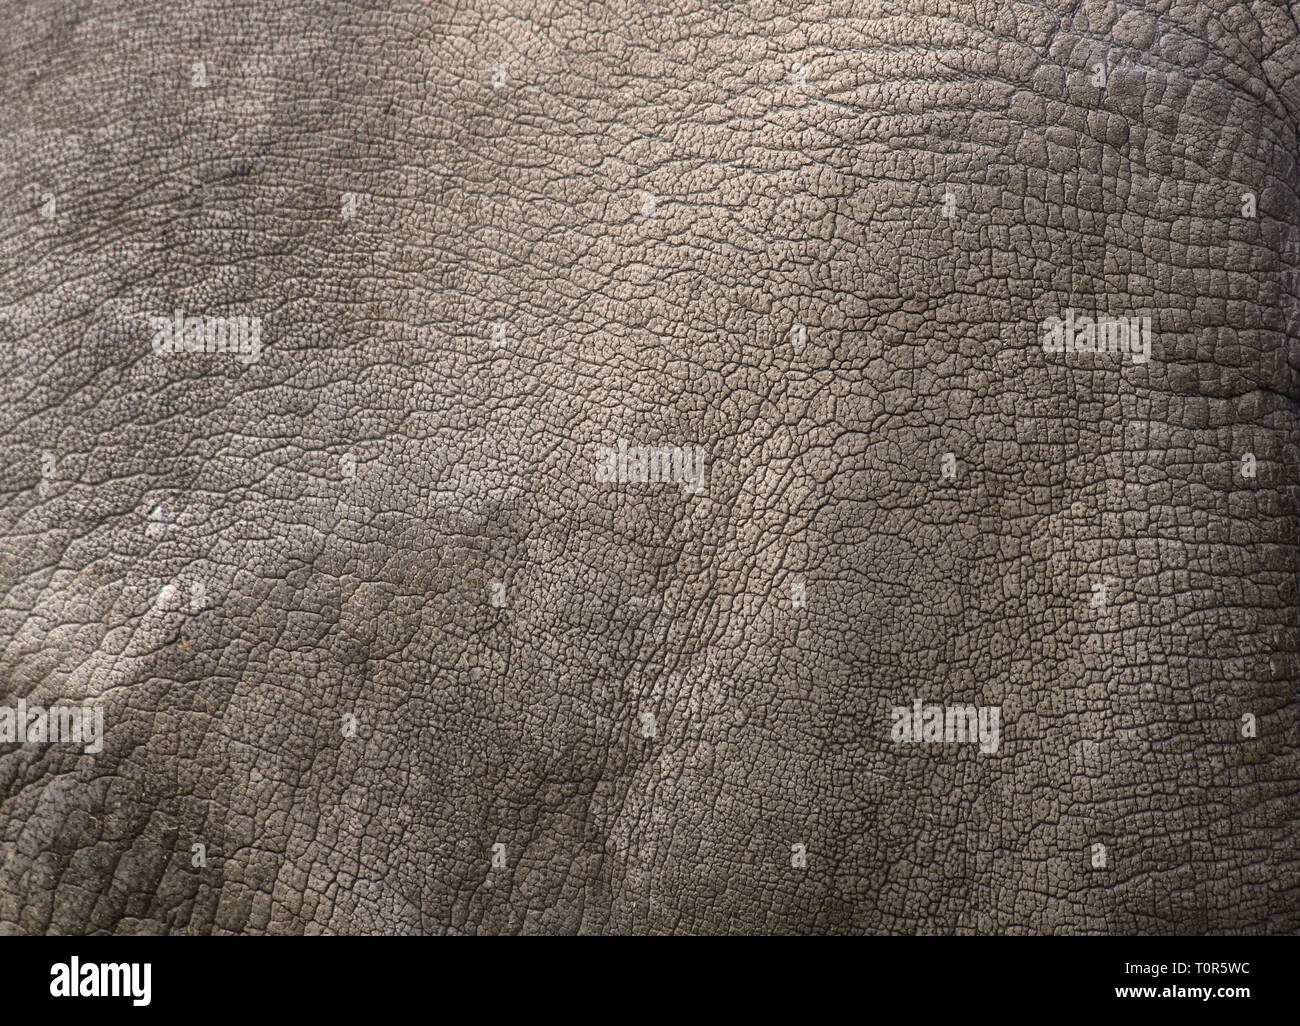 Close up view of Rhino skin (White rhinoceros) as background Stock Photo